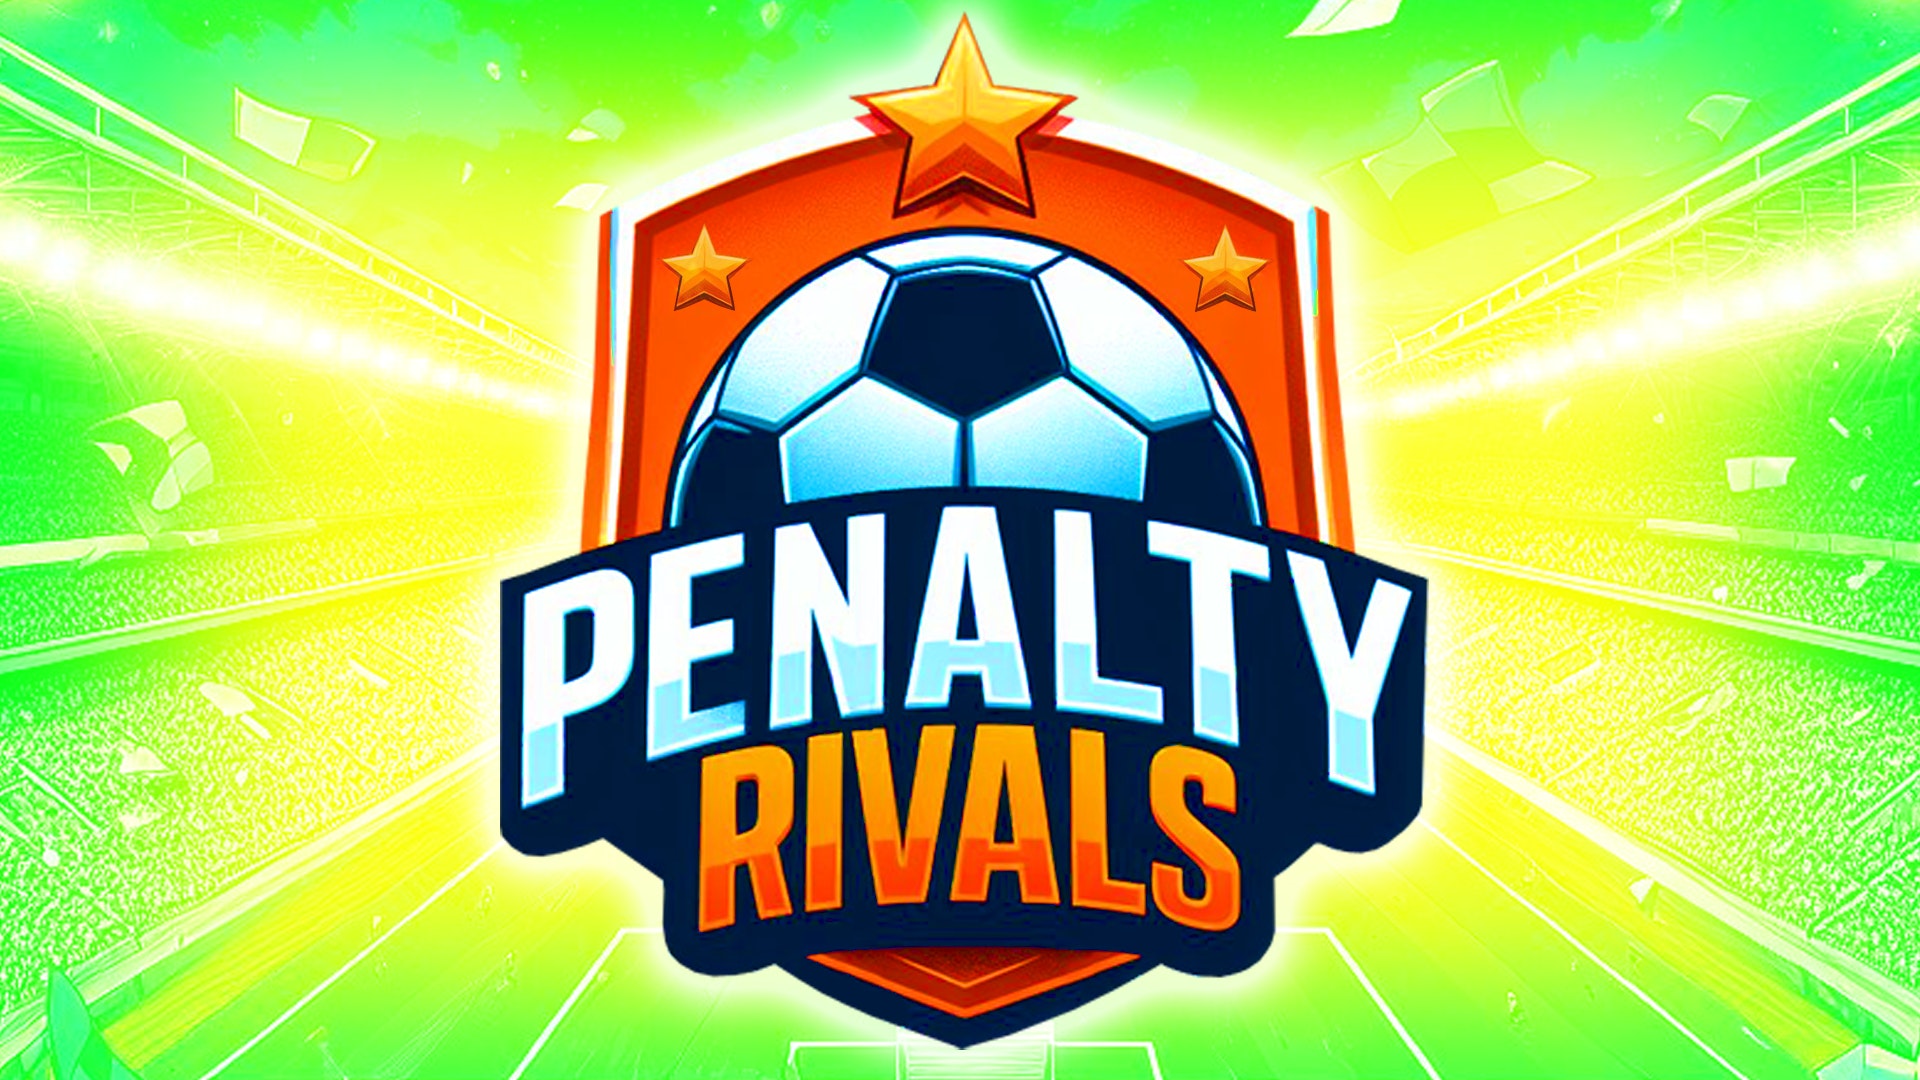 World Cup Penalty 🕹️ Jogue no CrazyGames